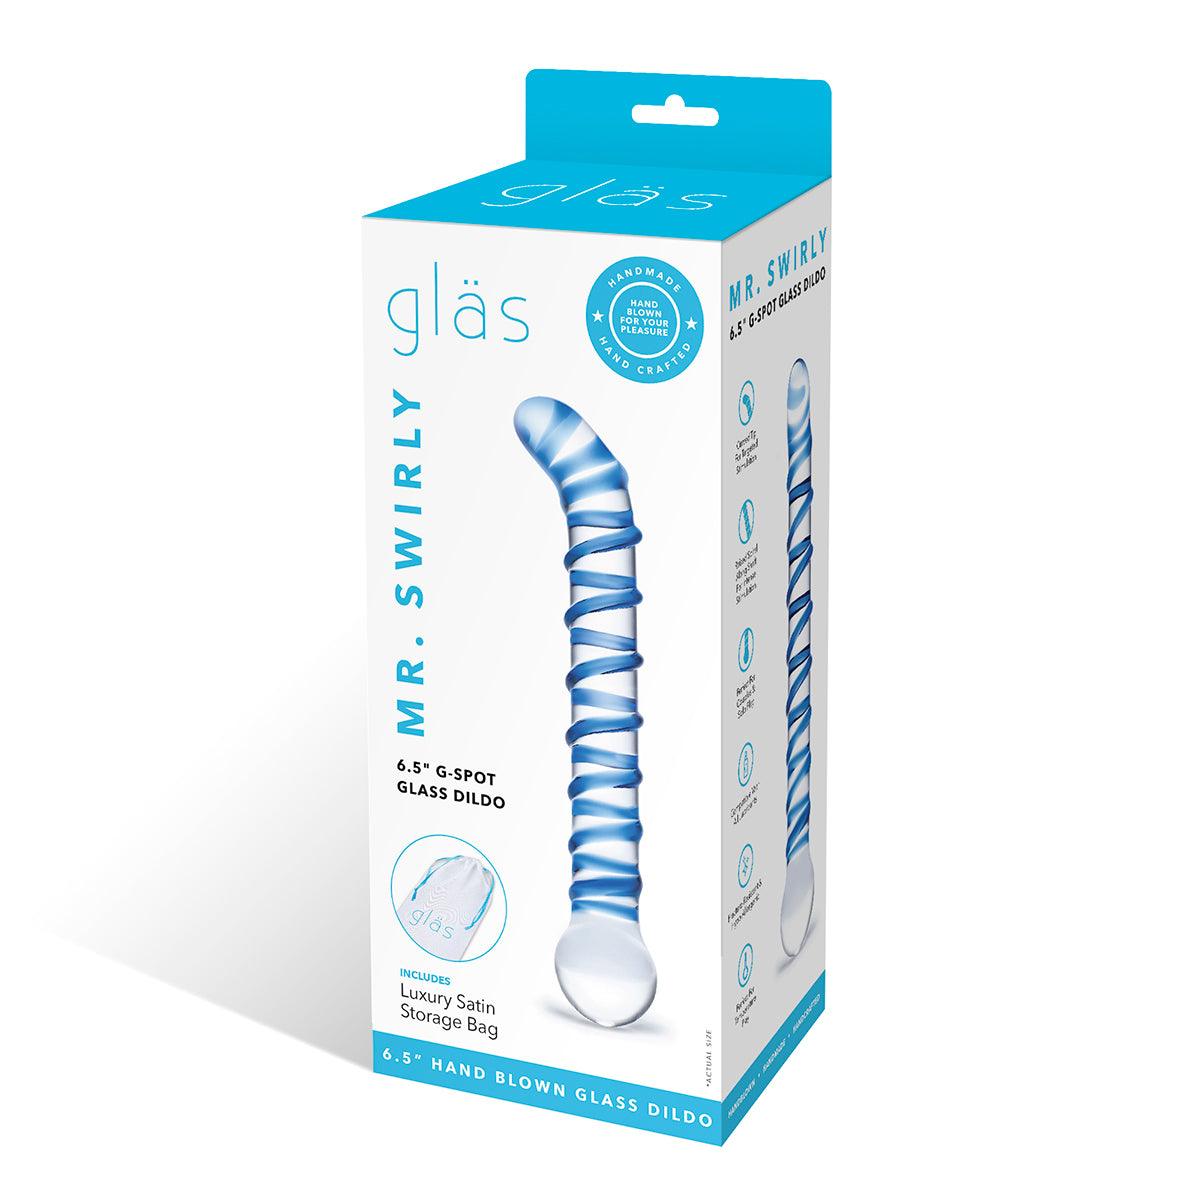 GLAS Mx. Swirly G-Spot Glass Dil 6.5&quot; - shop enby